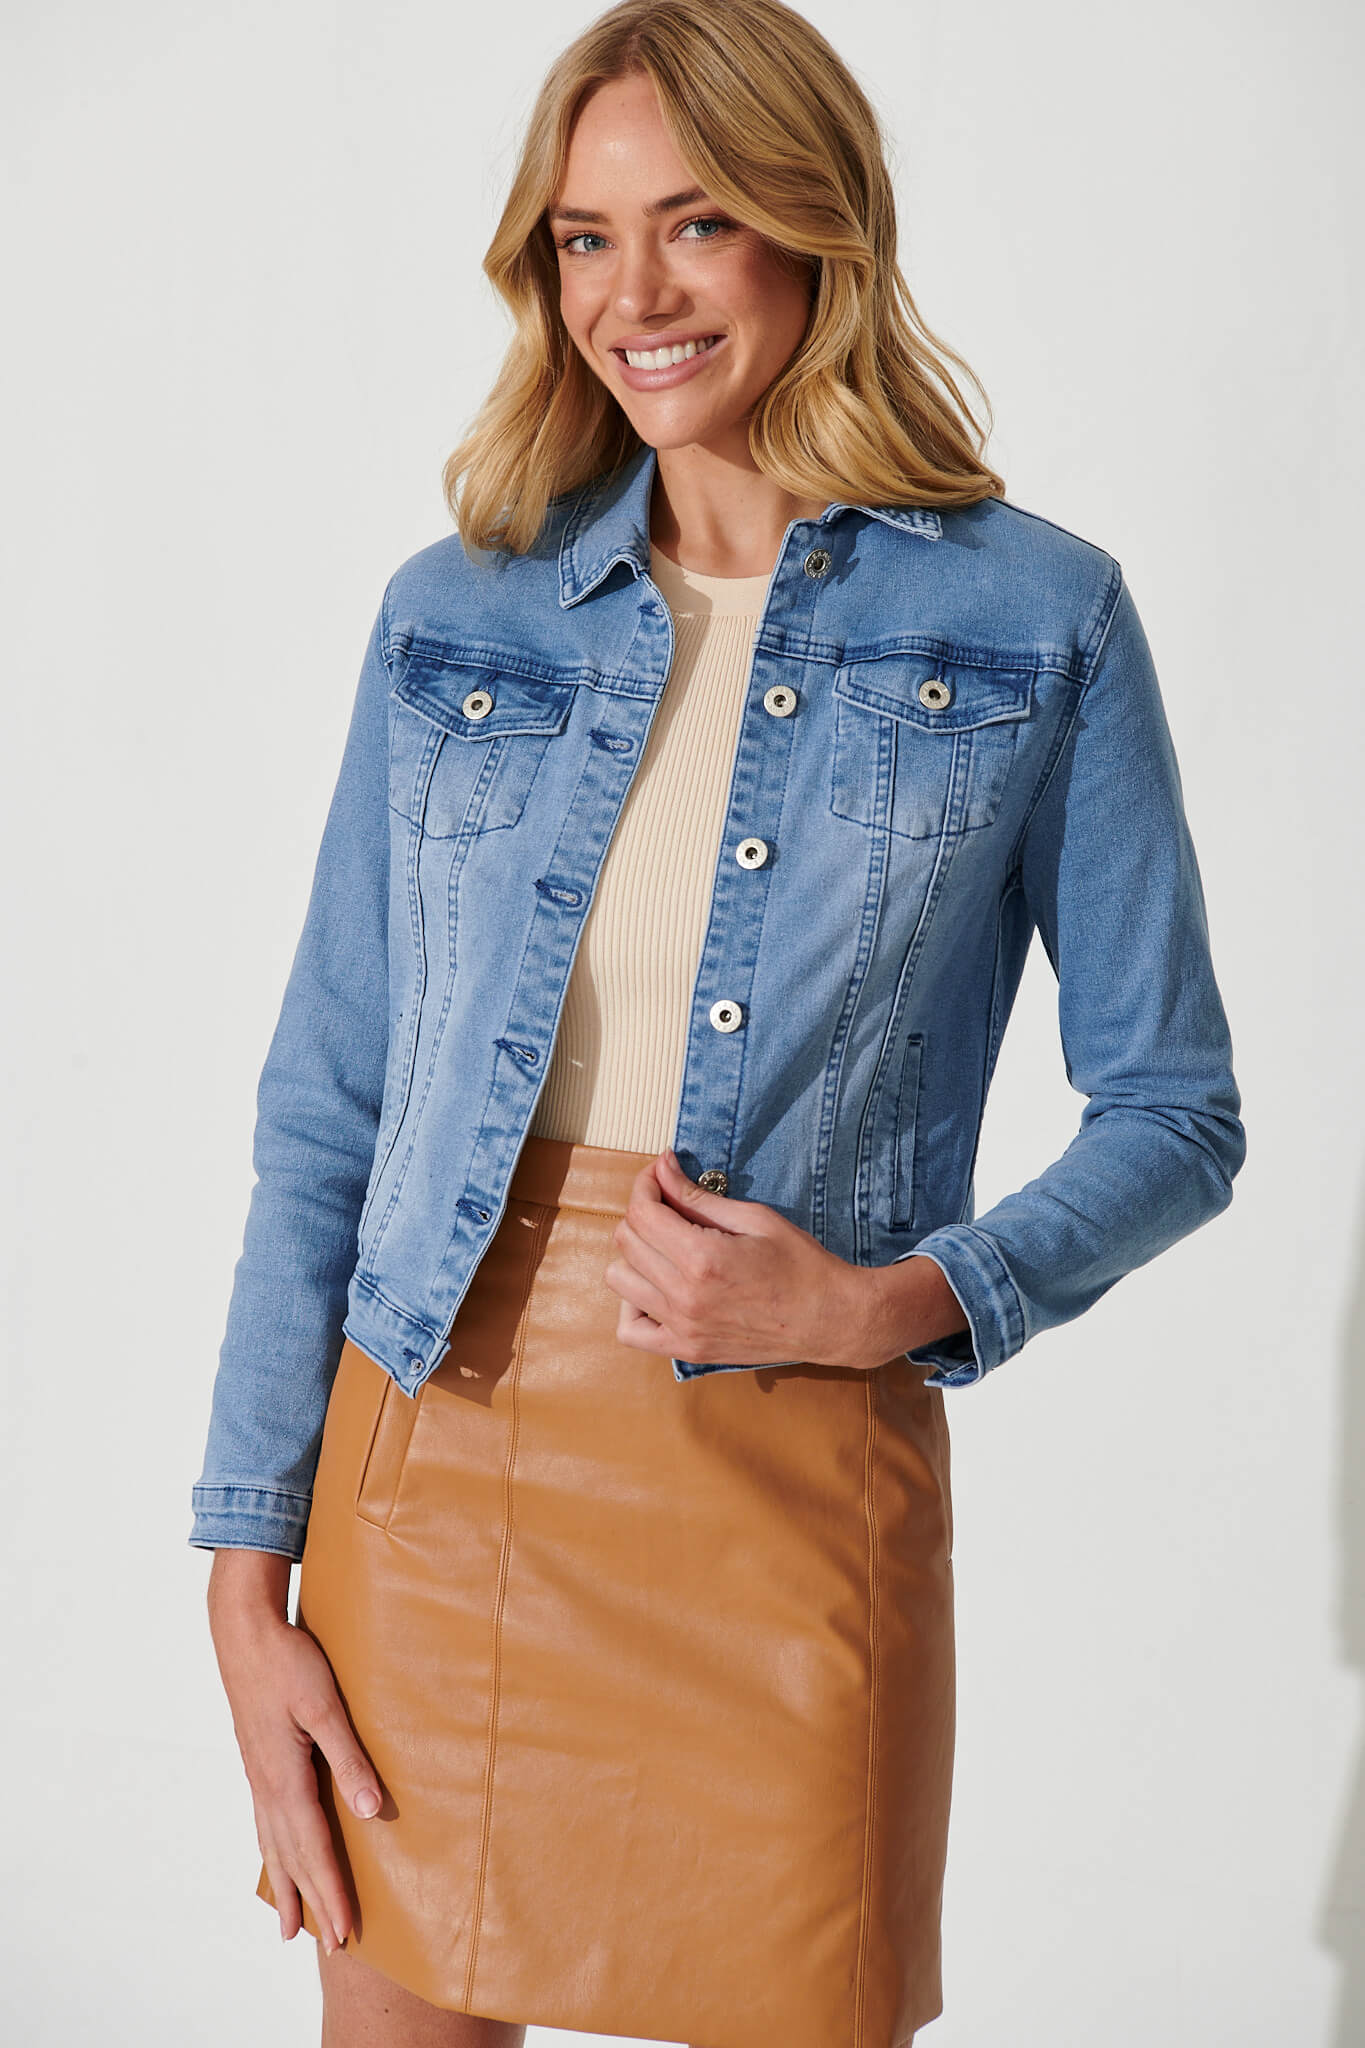 Rubbish | Jackets & Coats | Rubbish Denim Coat Blue Long Dress Jeans Jacket  Size S | Poshmark